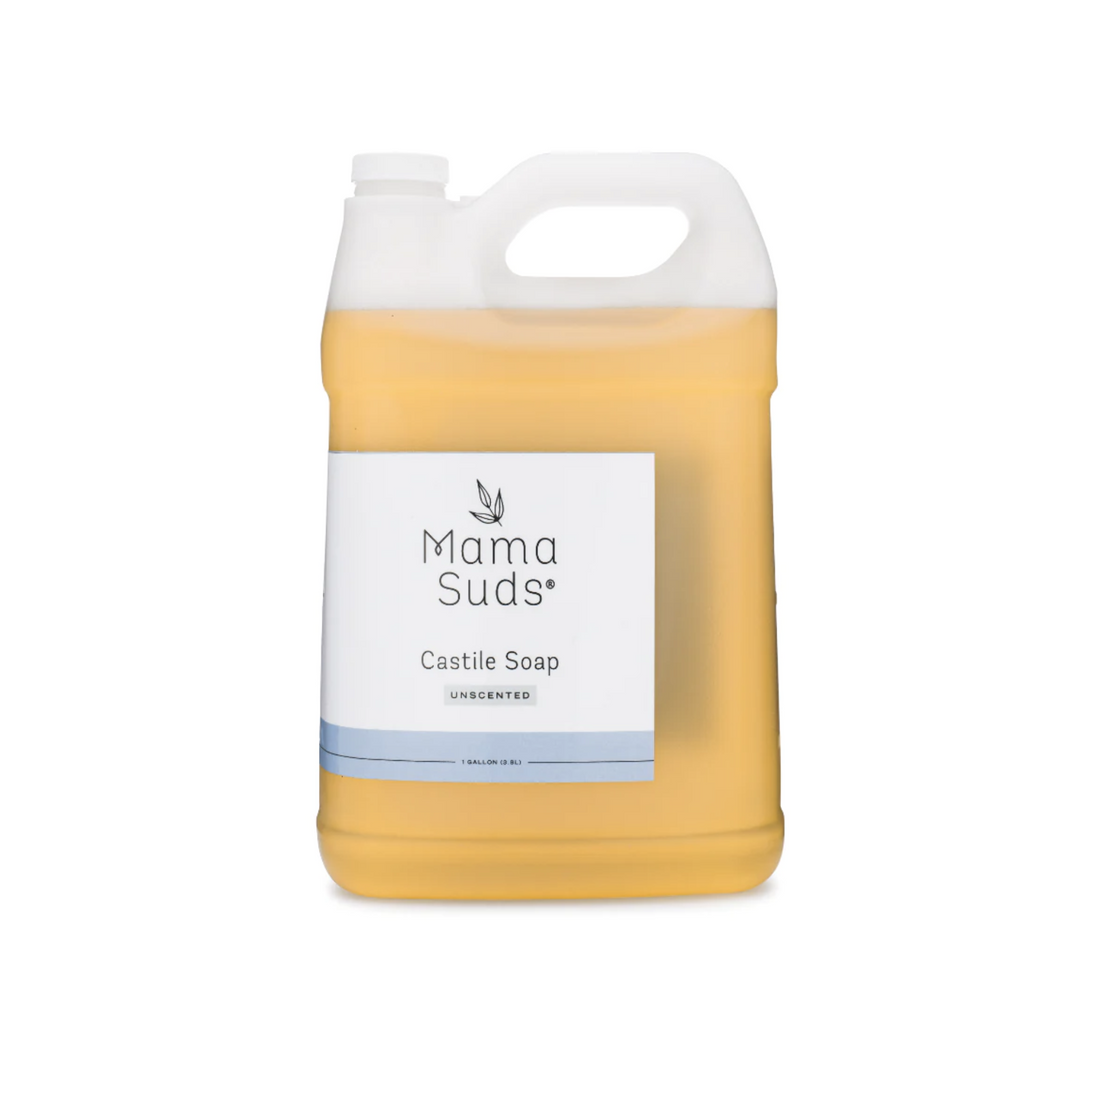 MAMA SUDS CASTILE SOAP